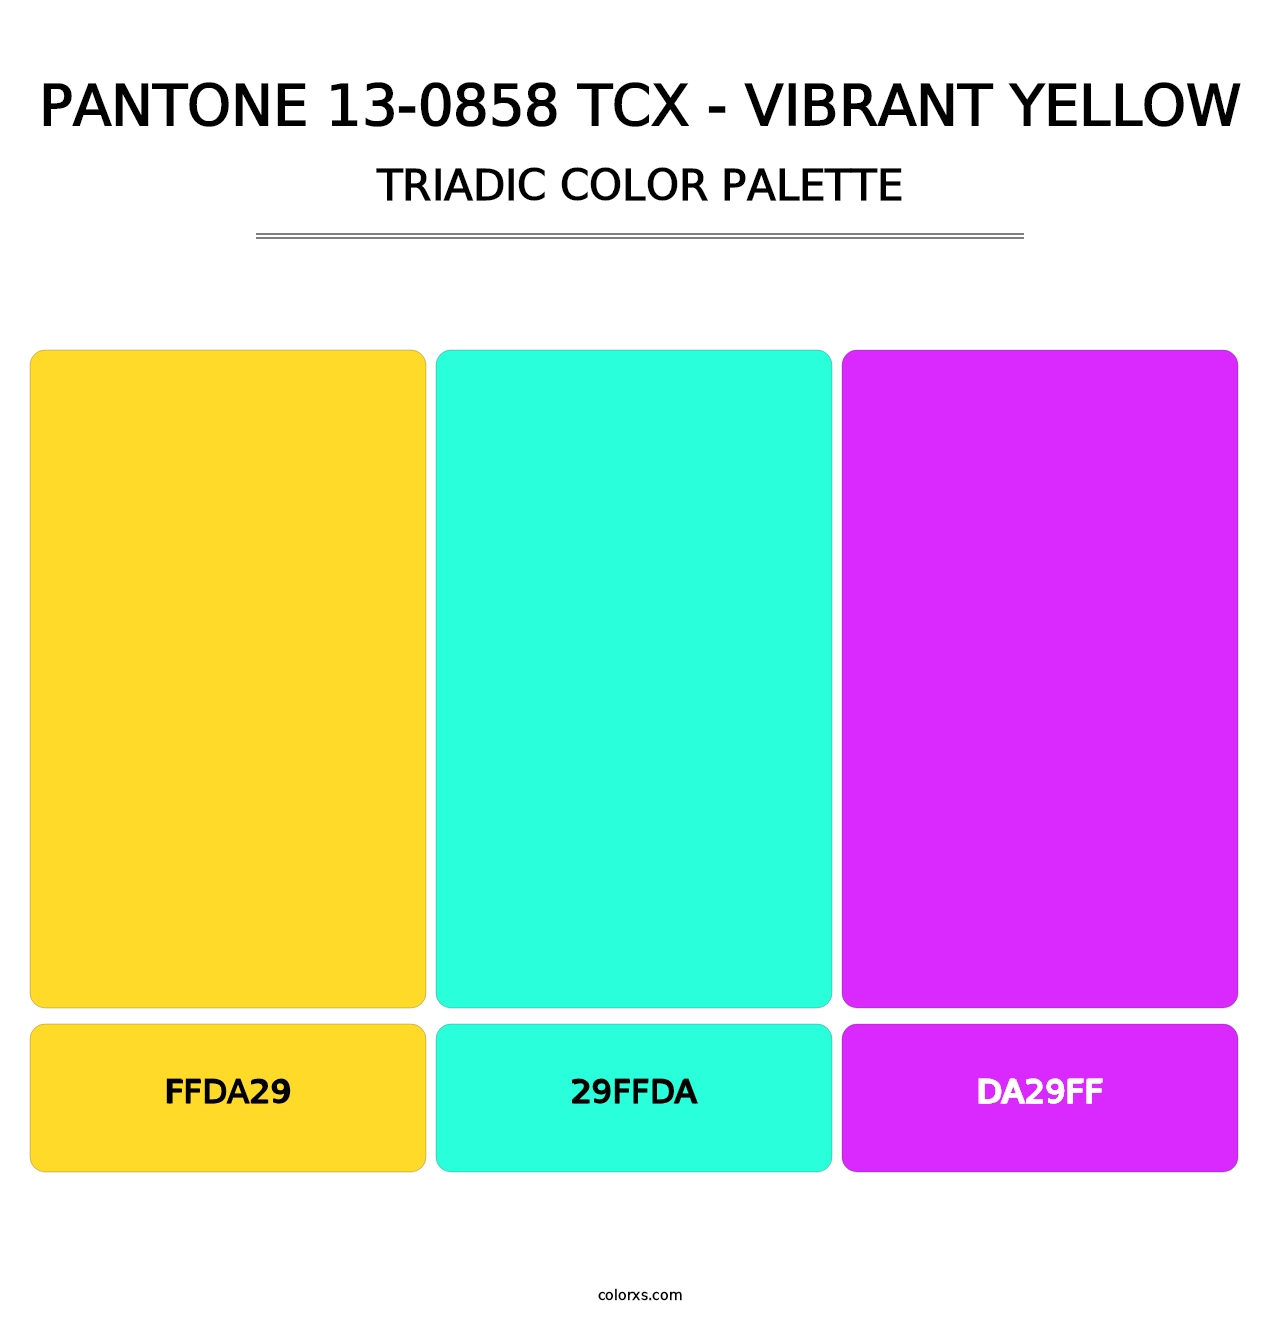 PANTONE 13-0858 TCX - Vibrant Yellow - Triadic Color Palette